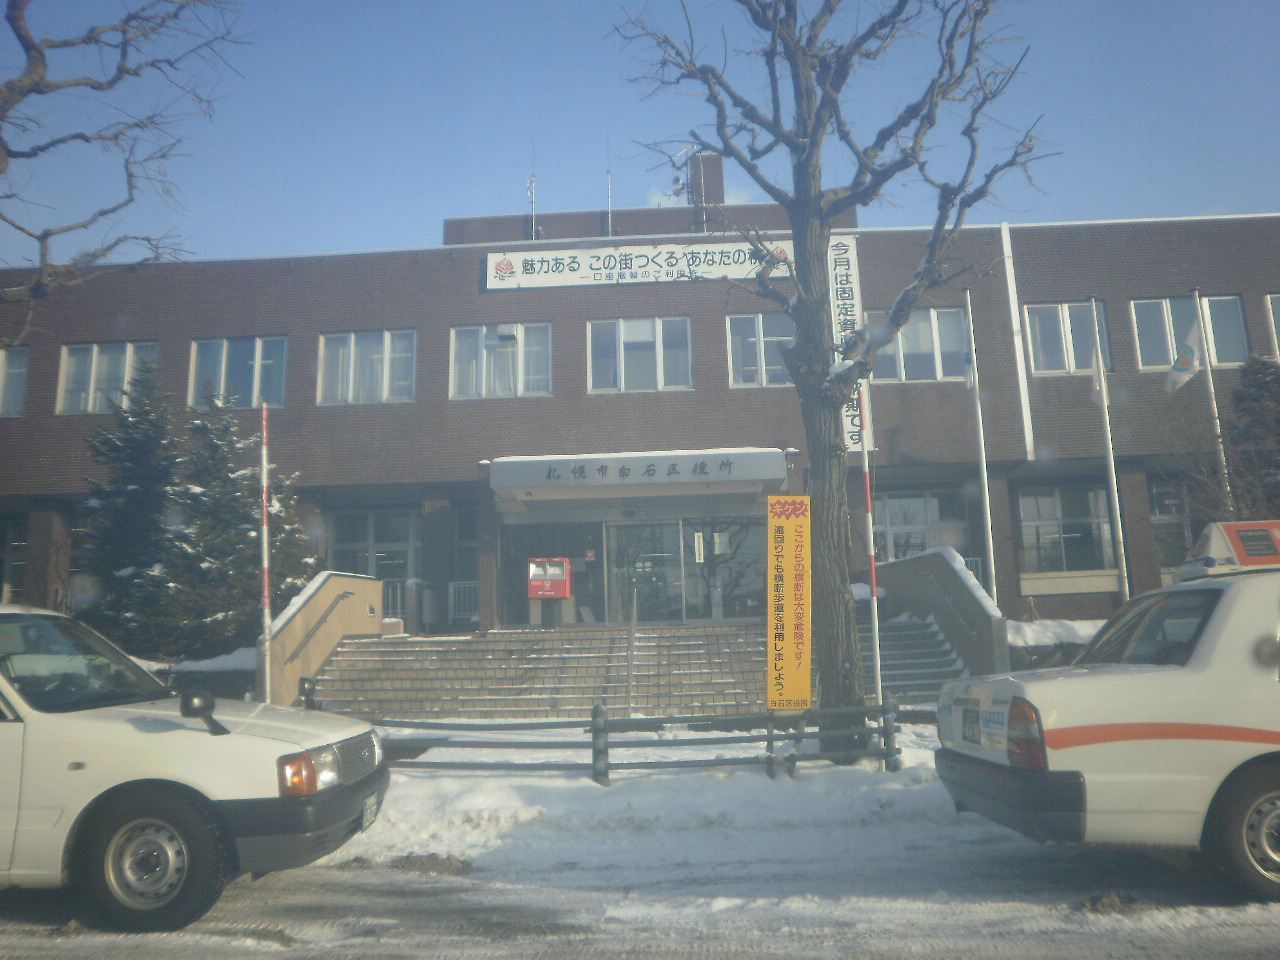 Government office. 1032m to Sapporo Shiroishi ward office (government office)